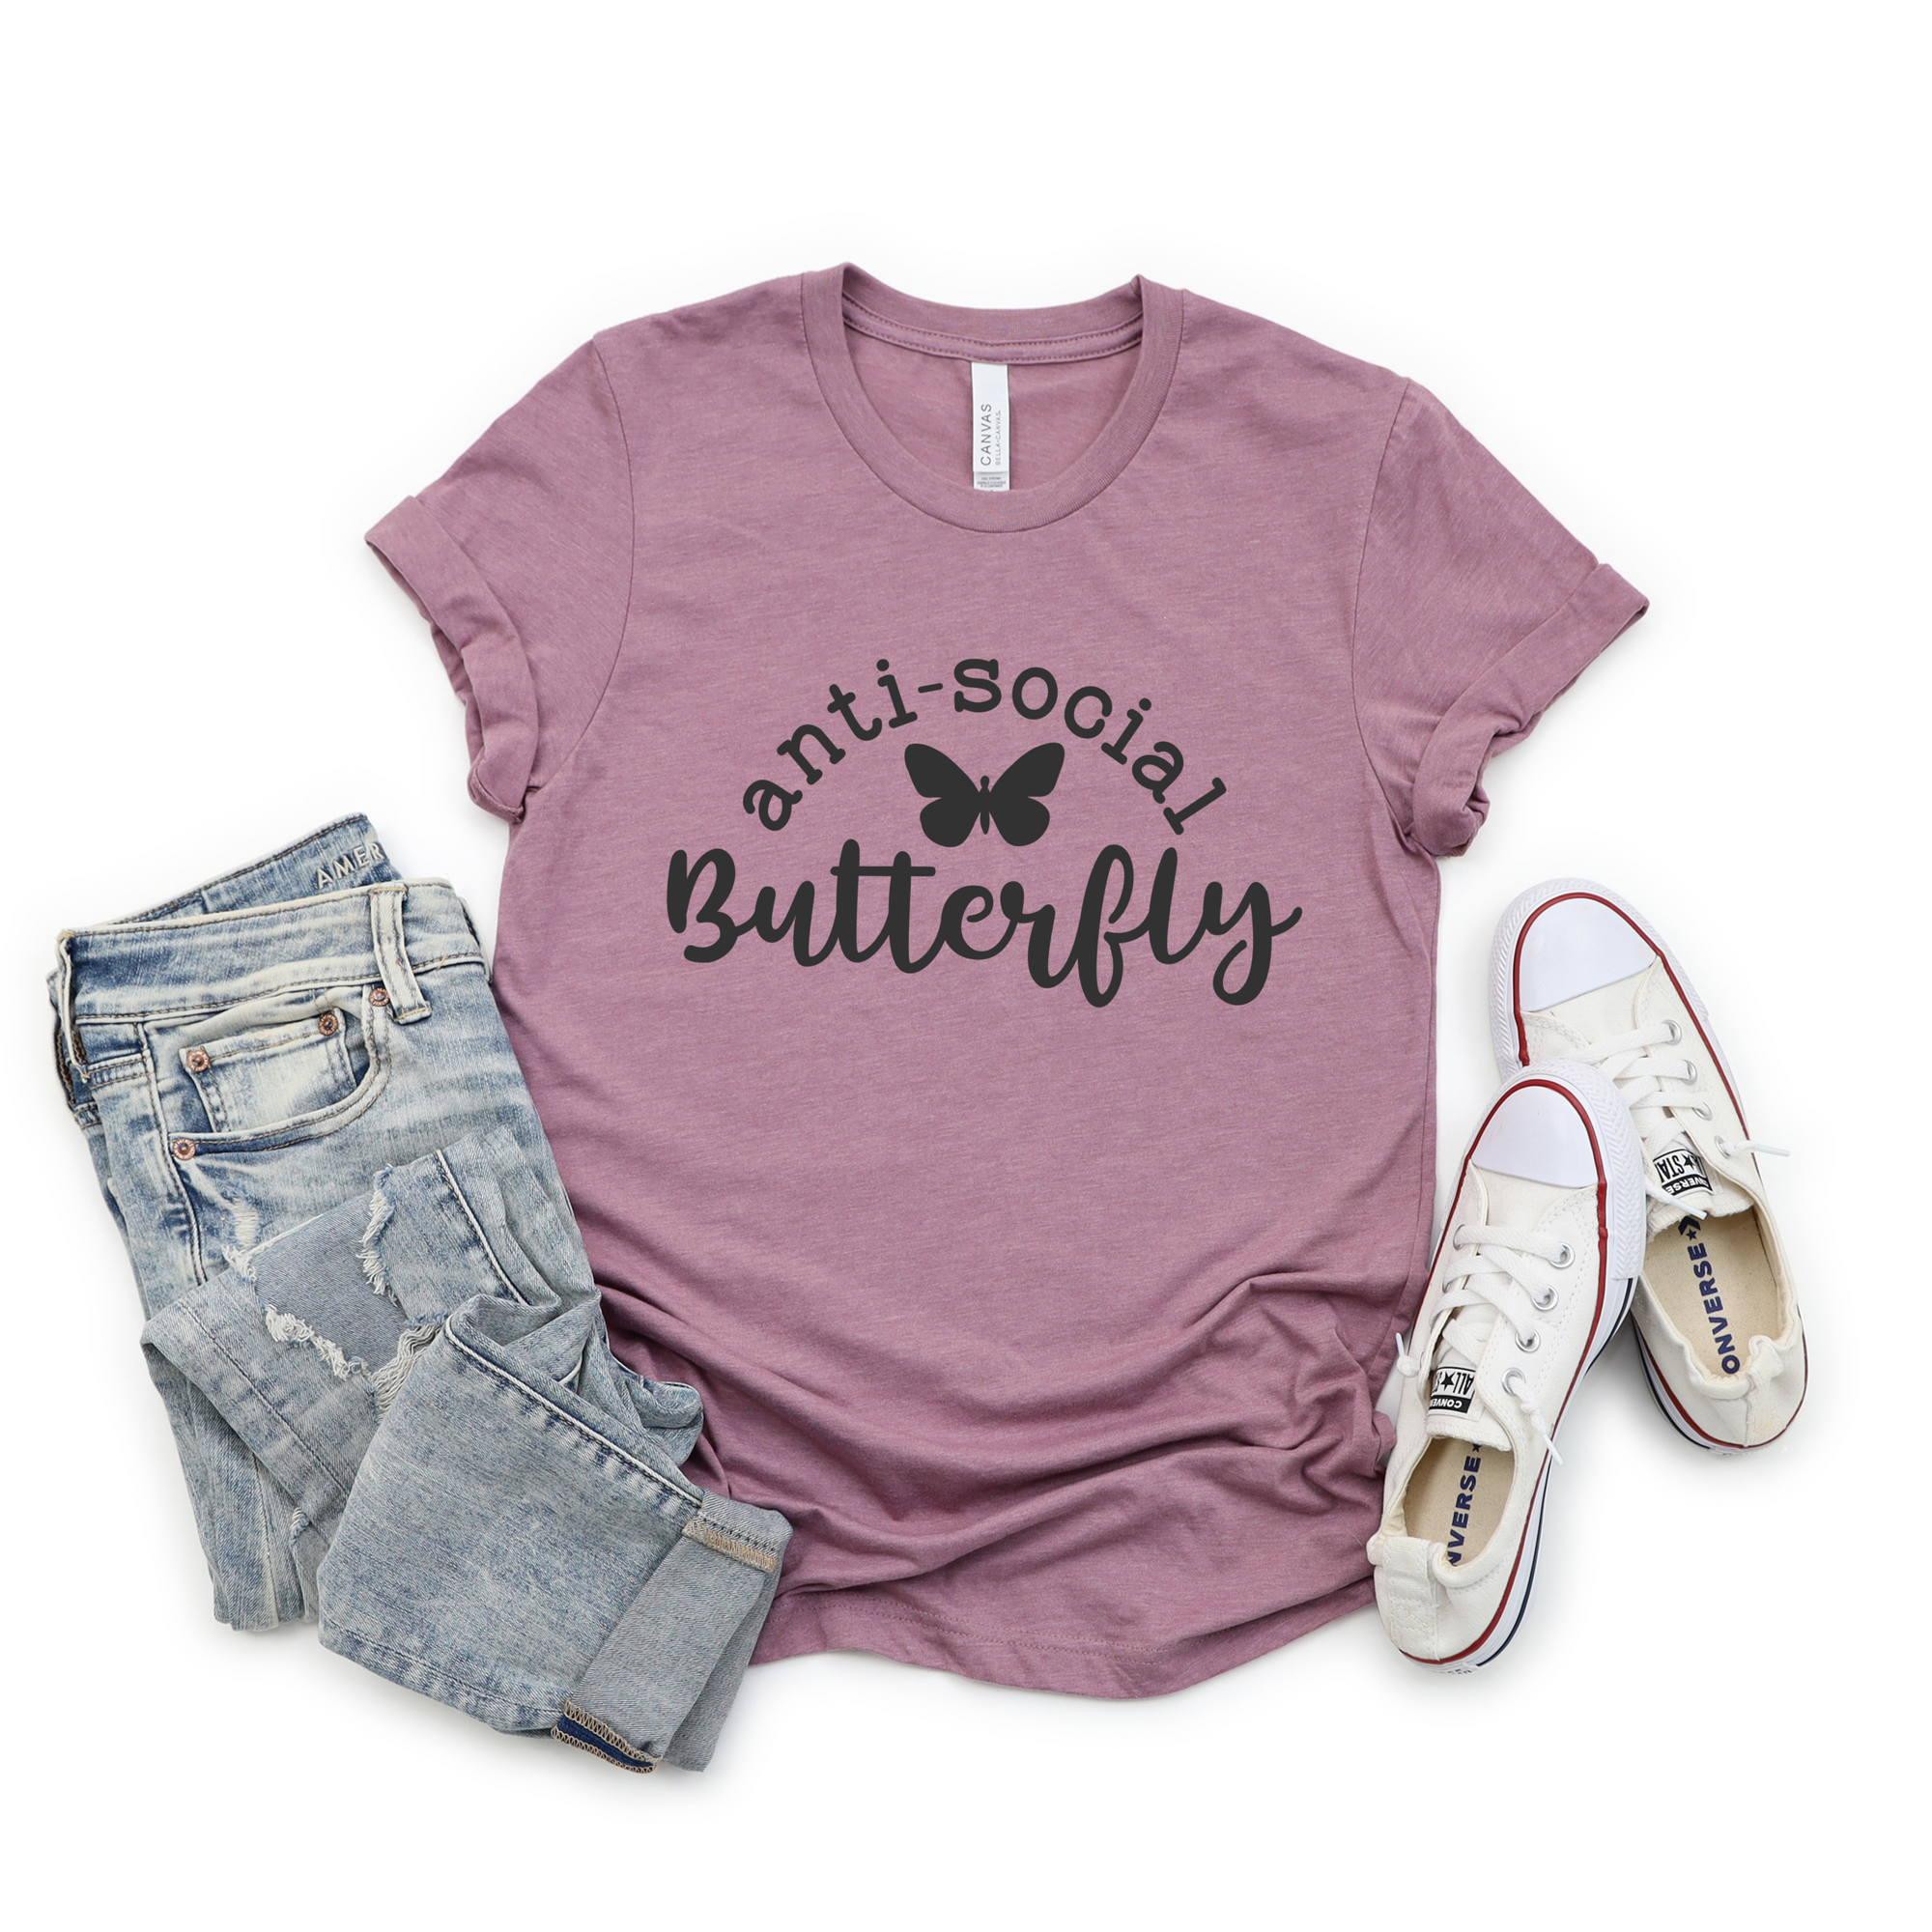 Anti-Social Butterfly Tee